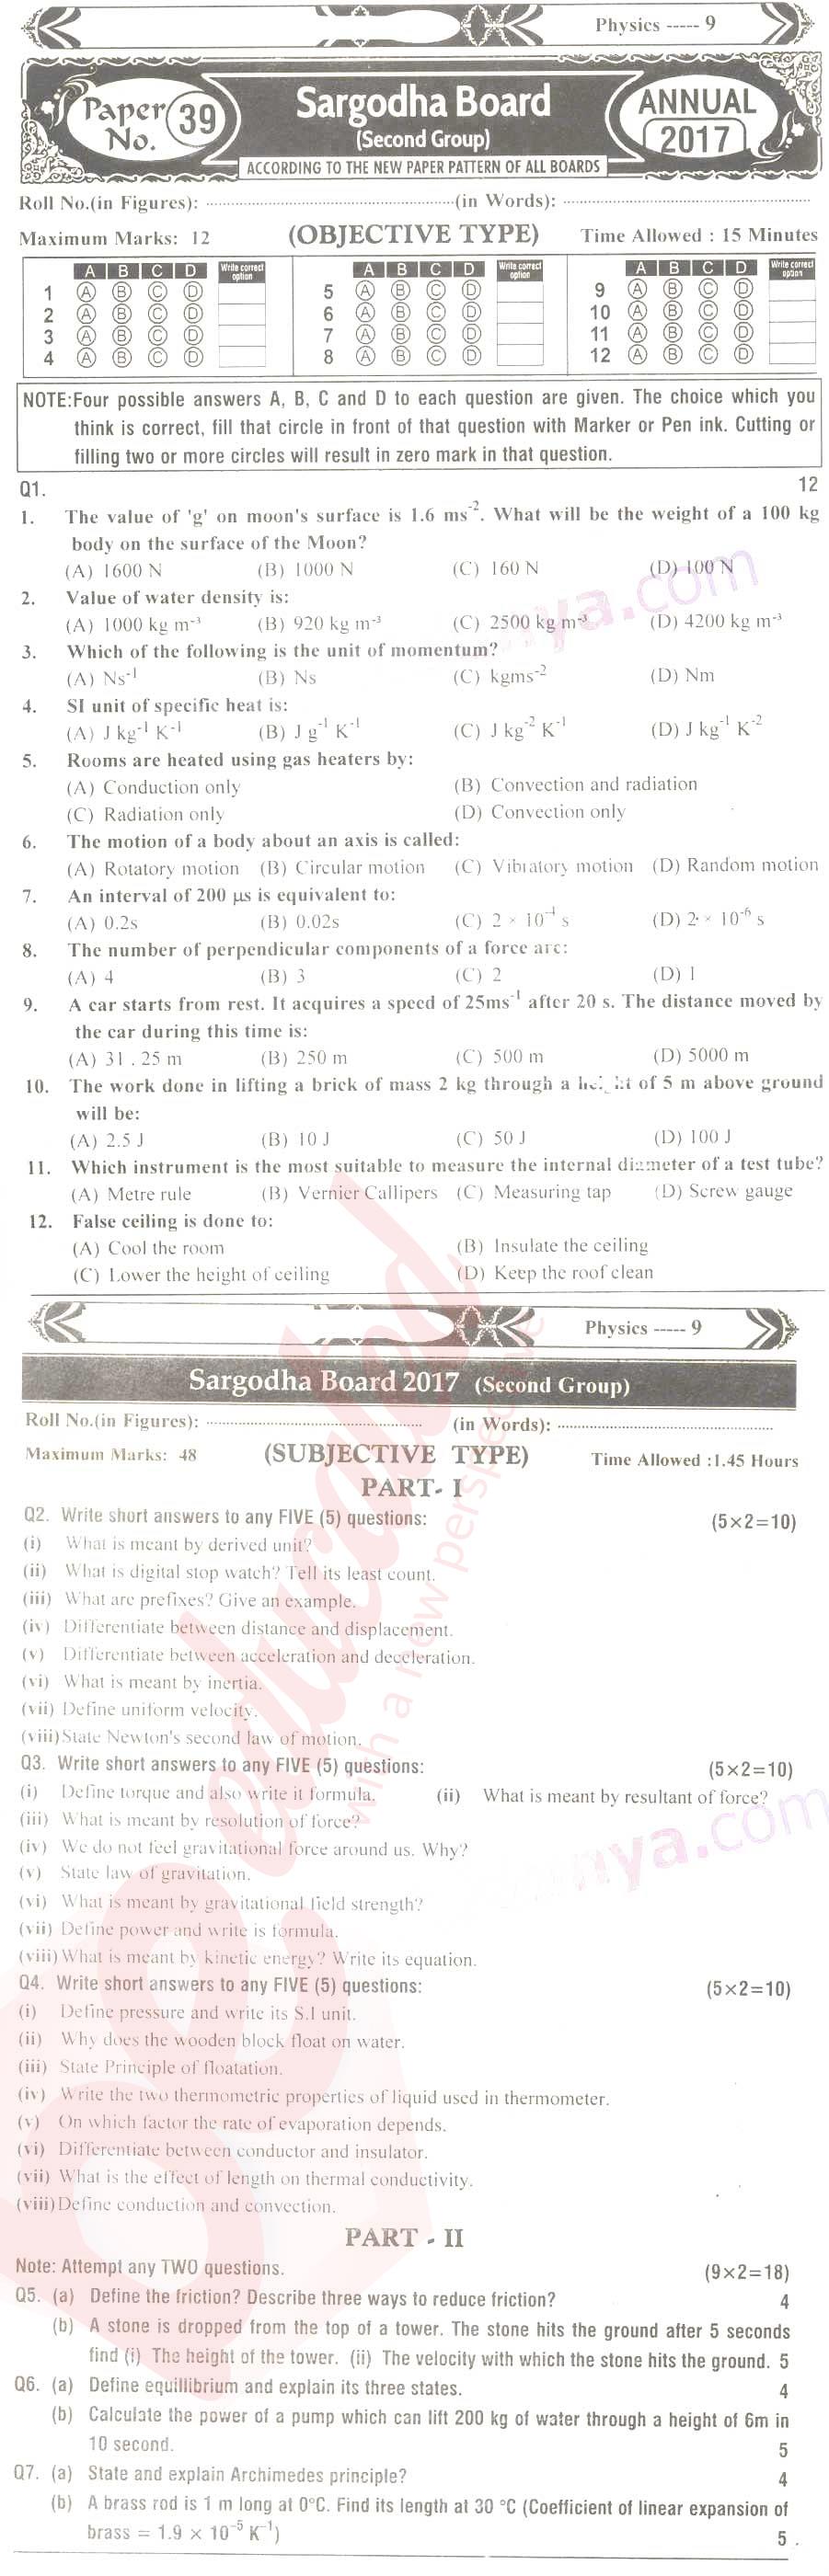 Physics 9th English Medium Past Paper Group 2 BISE Sargodha 2017